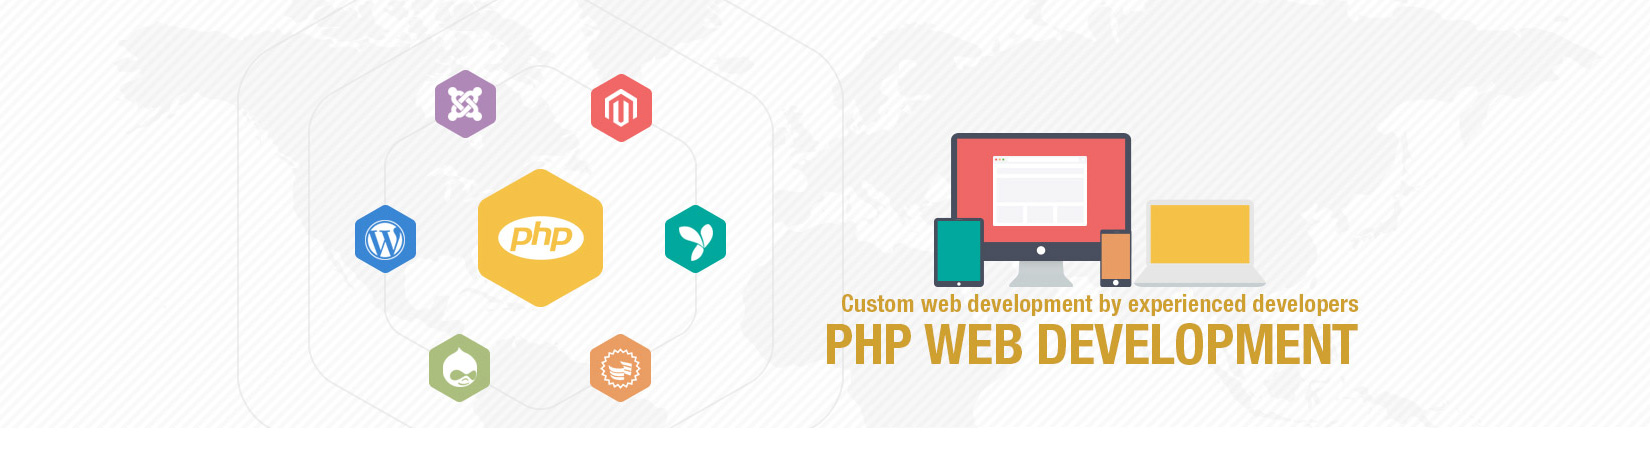 Web Development php mysql